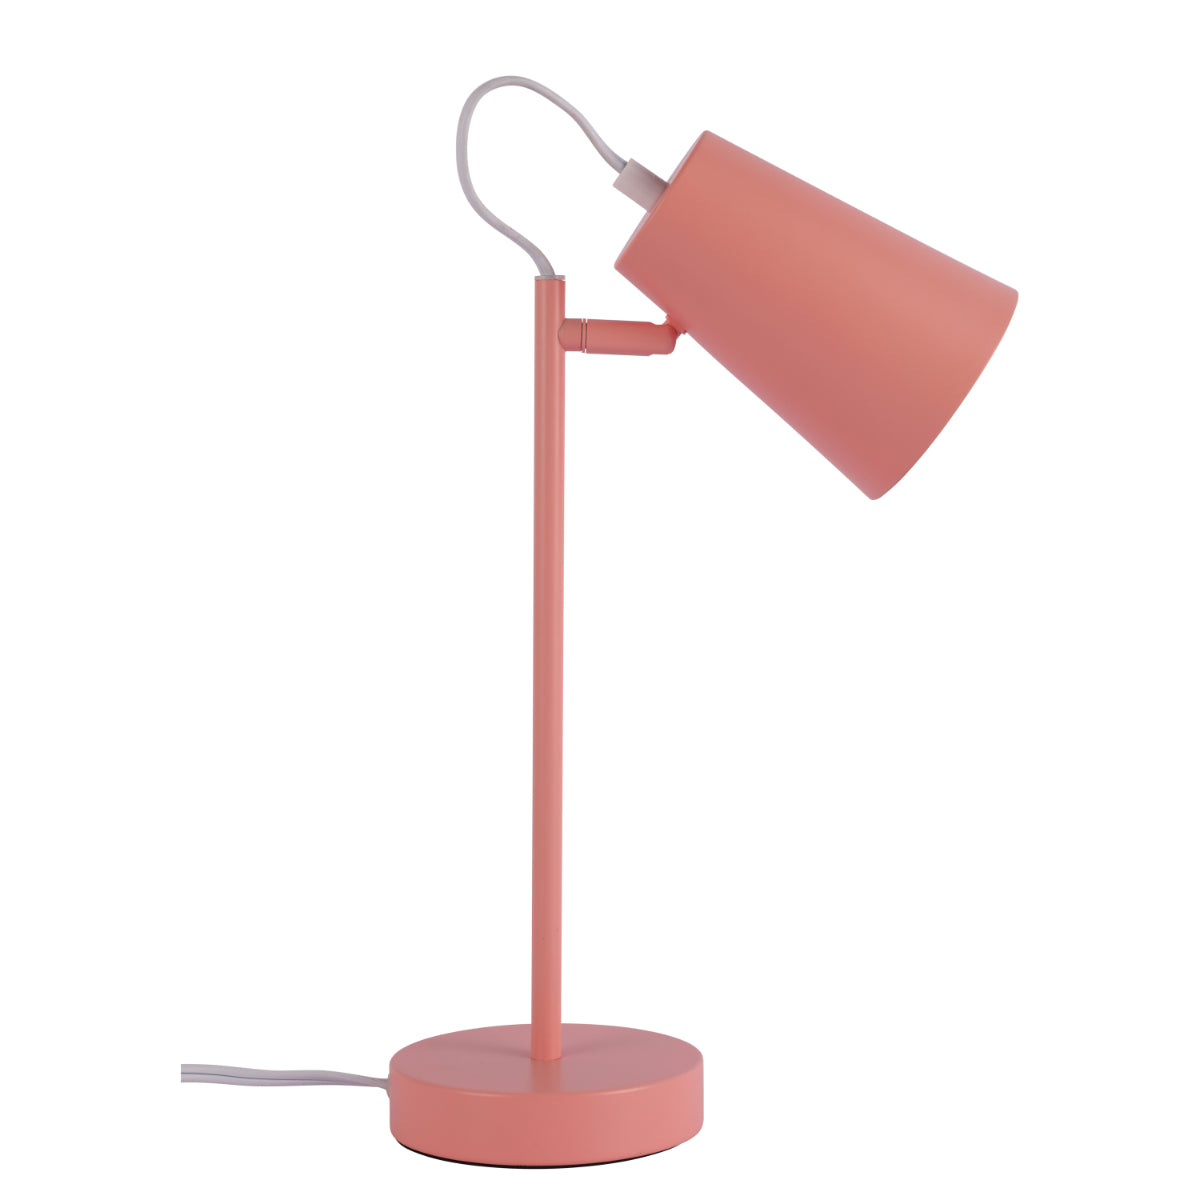 Main image of Sleek Cut Cone Desk Lamp in Vibrant Colors - Modern Elegance 130-03668